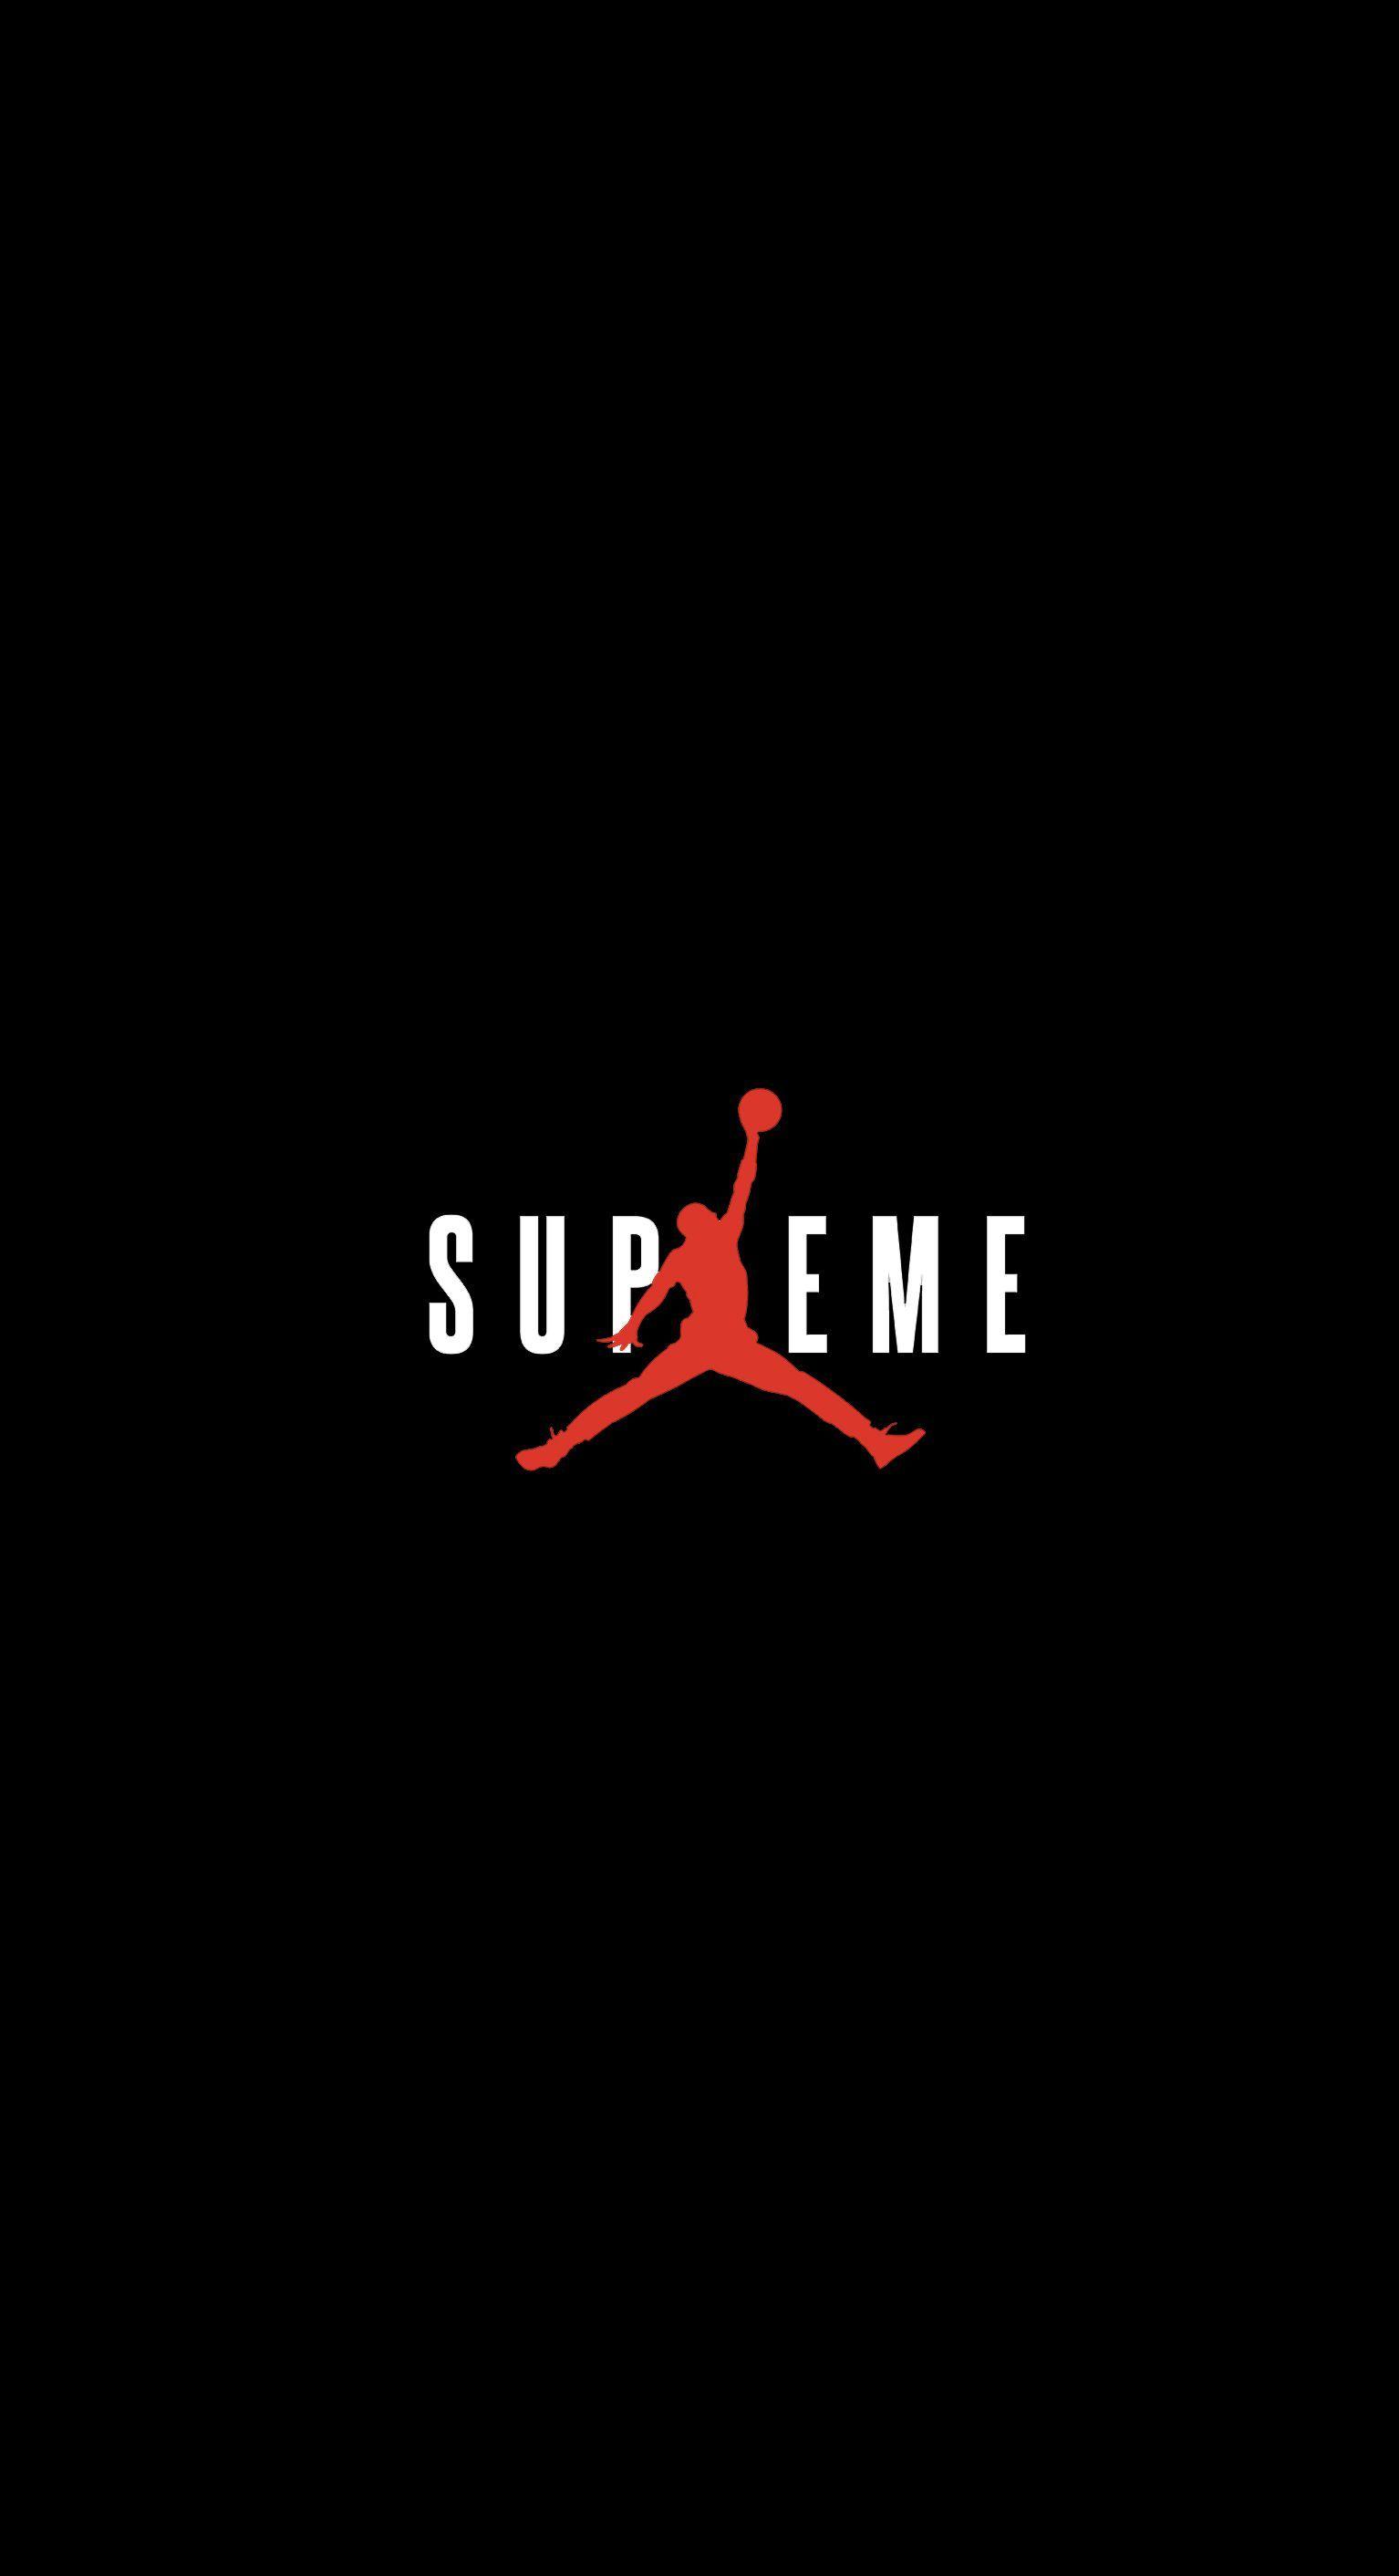 Supreme Basketball Logo - Supreme x Jordan Wallpaper : streetwear - Streetwear Wallpapers ...